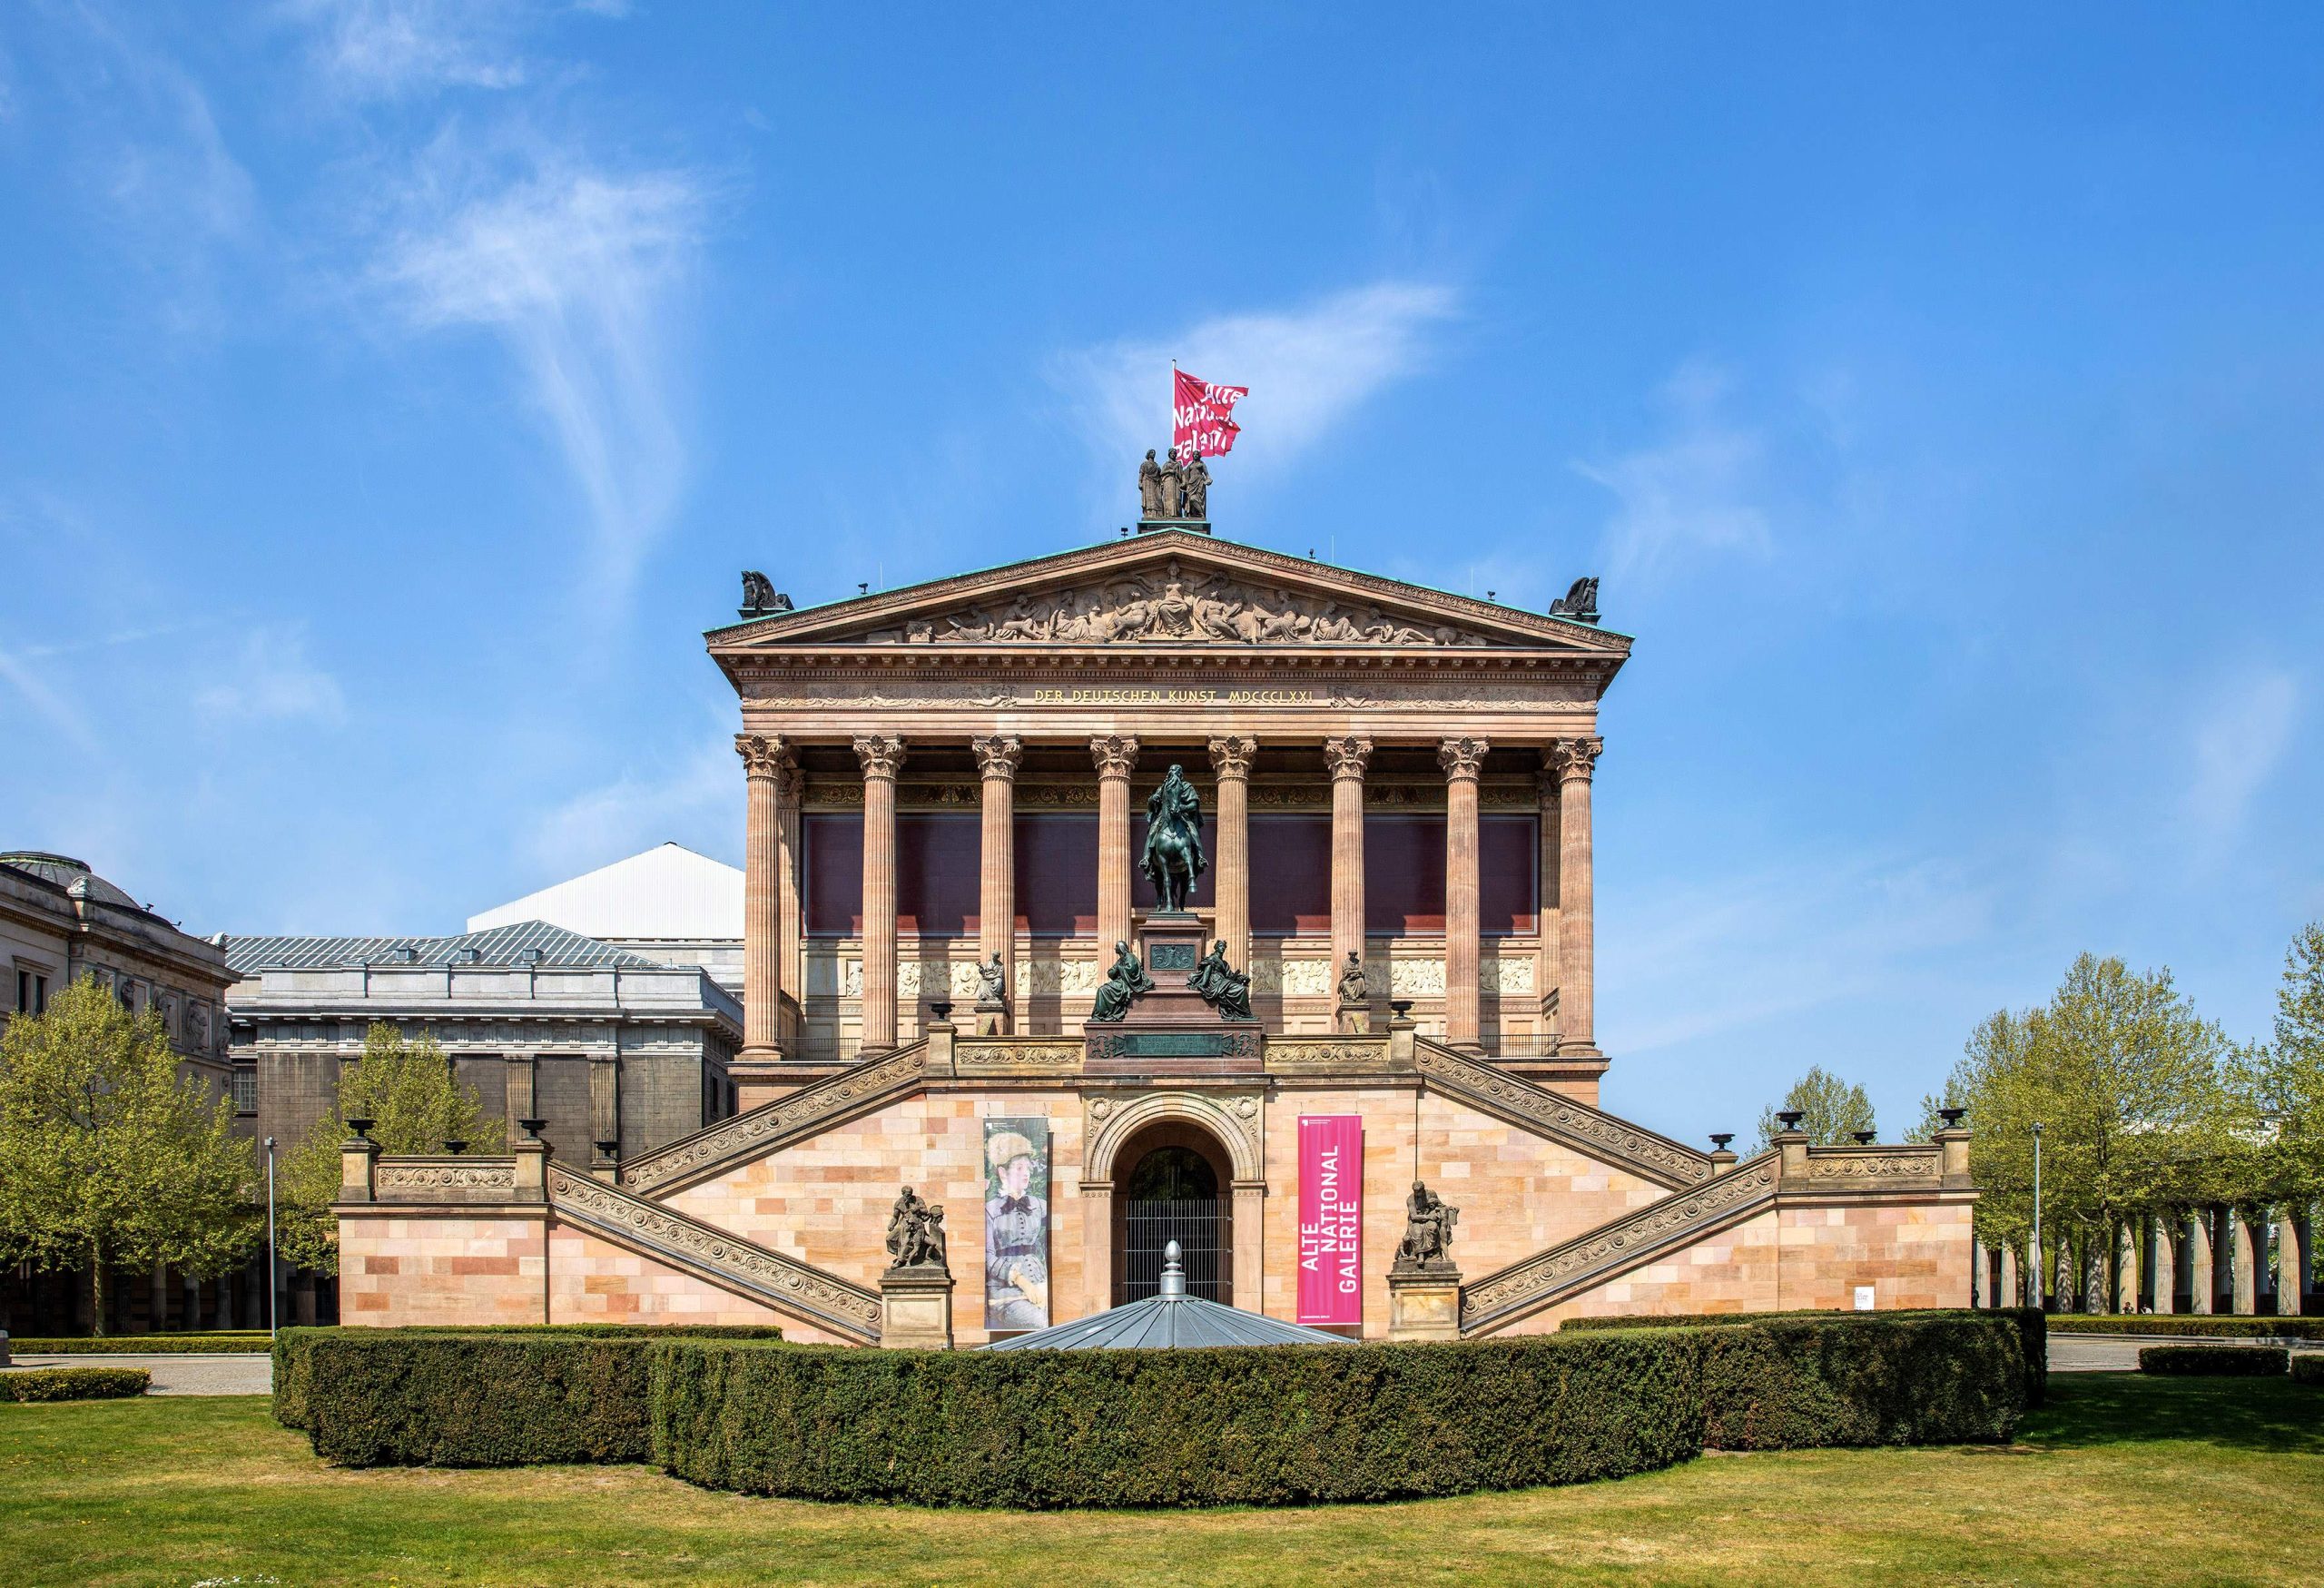 Alte Nationalgalerie, Old National Gallery Berlin Germany